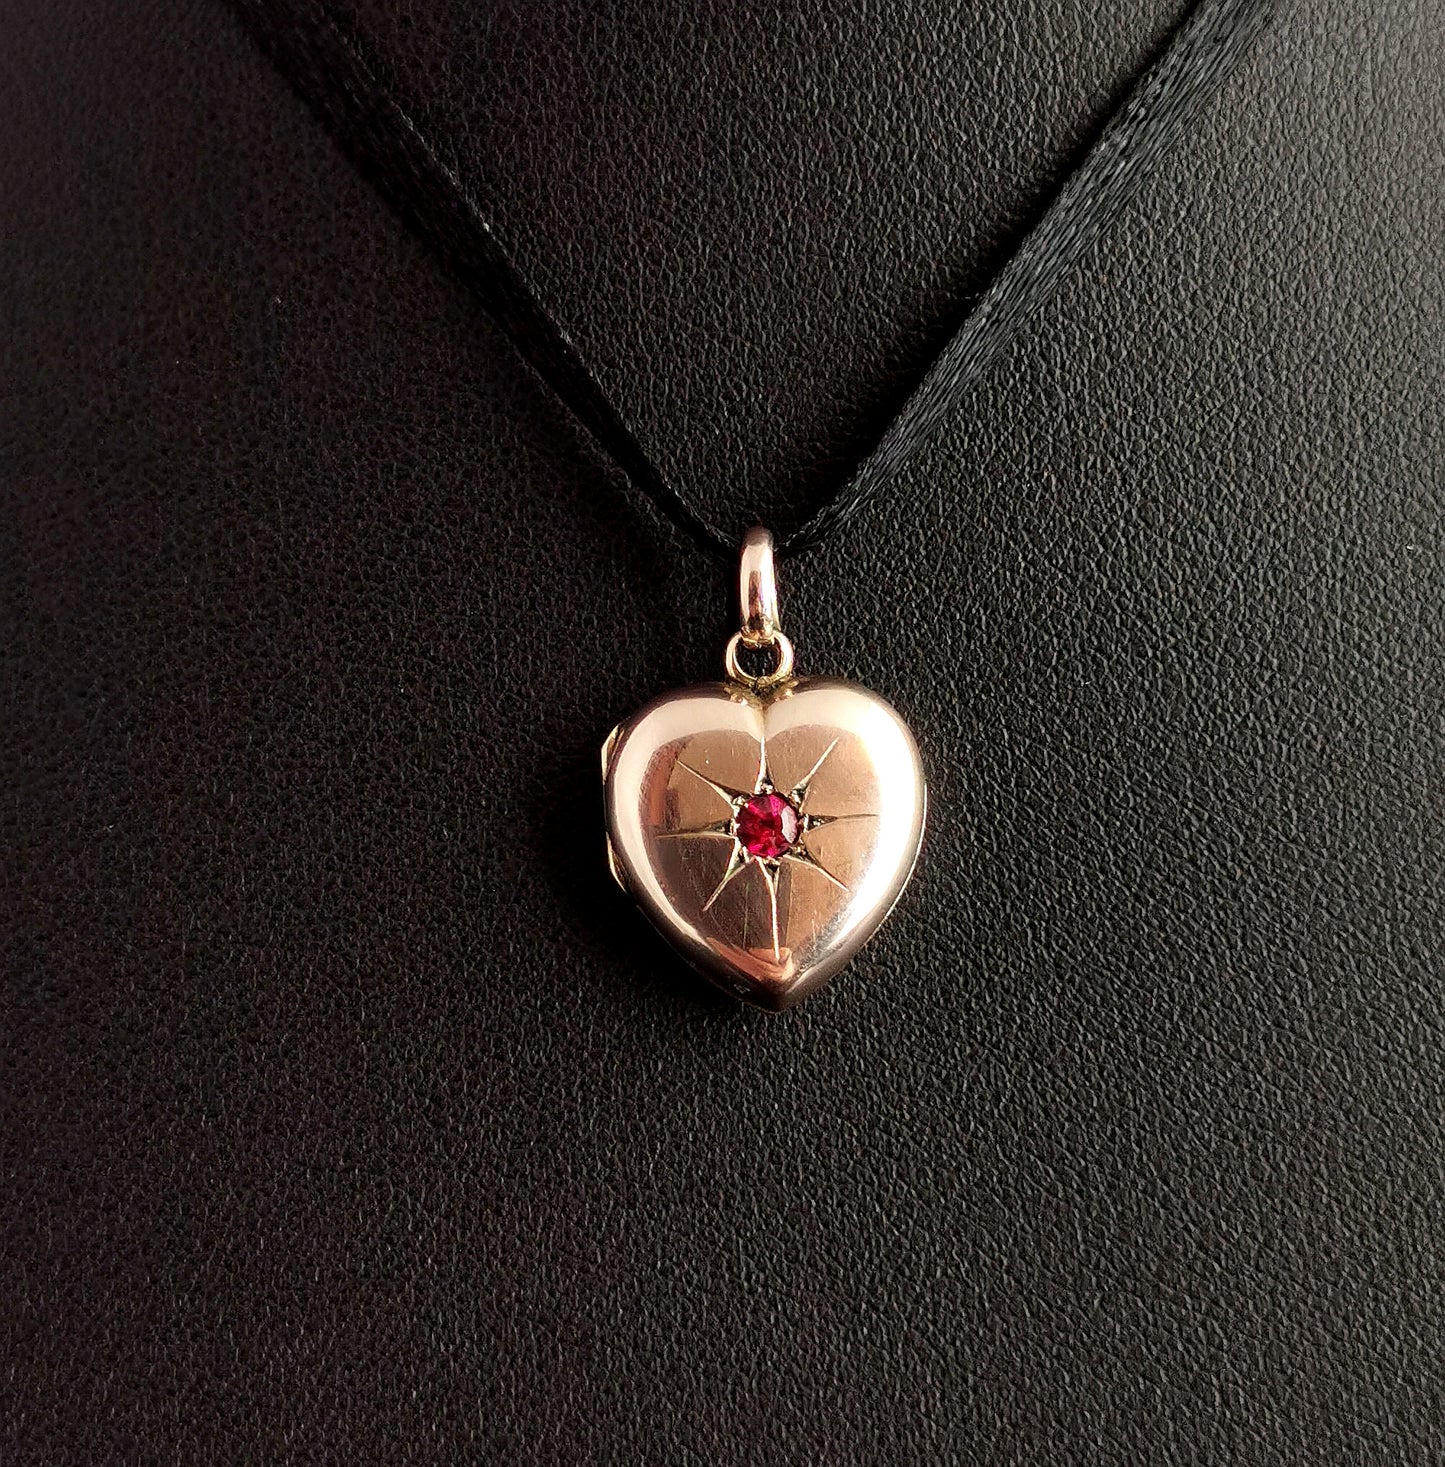 Antique Edwardian heart locket pendant, gold plated, paste